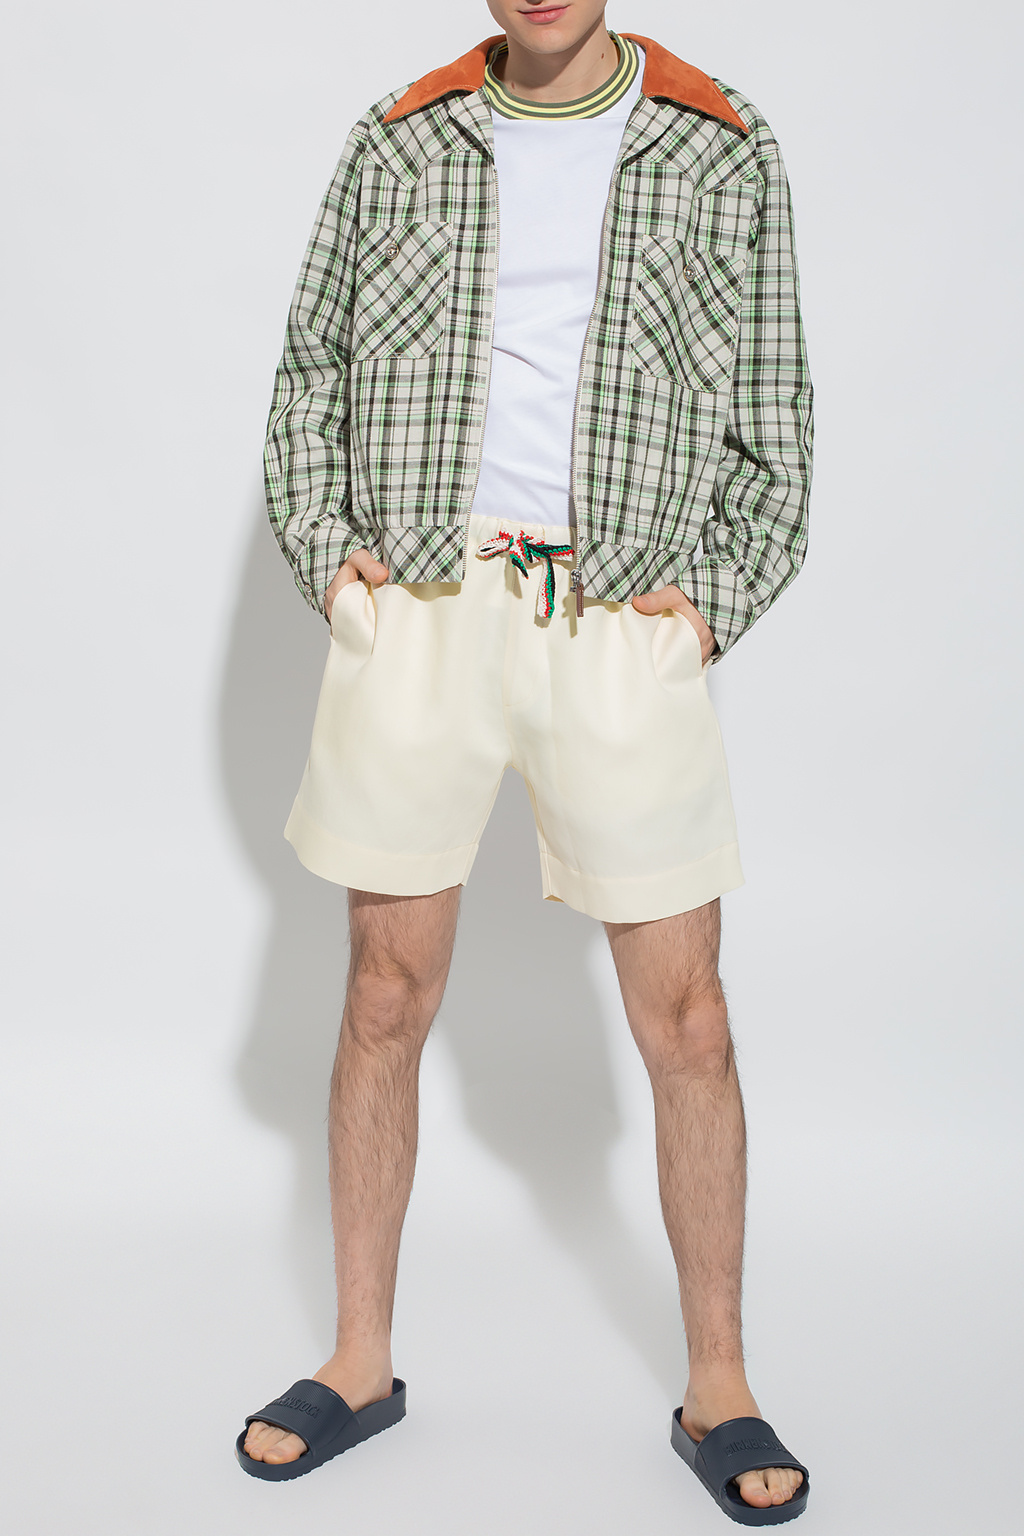 Wales Bonner ‘Mali’ shorts | Men's Clothing | Vitkac